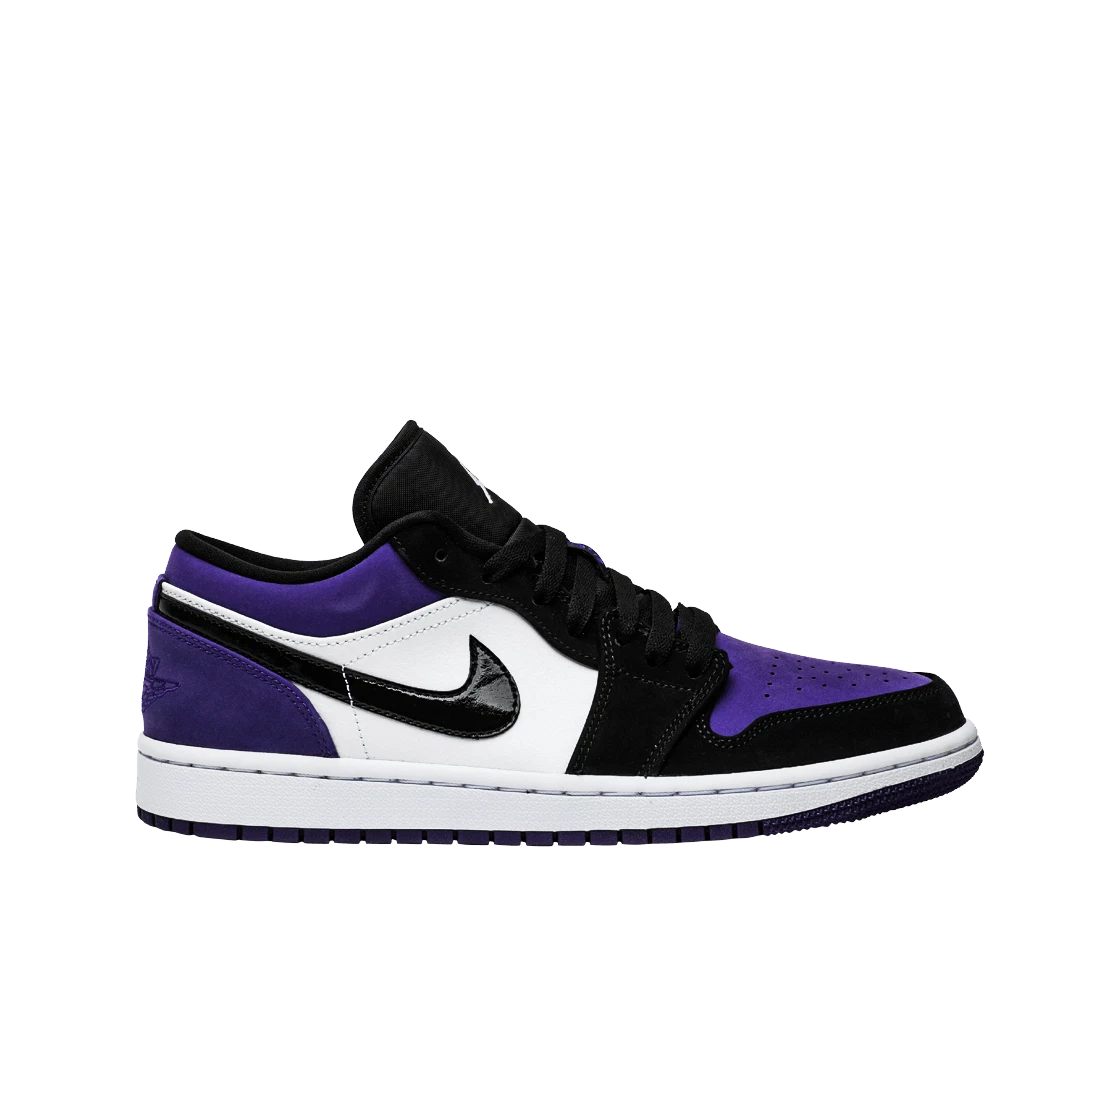 SASOM รองเท้า Jordan 1 Low Court Purple เช็คราคาล่าสุด